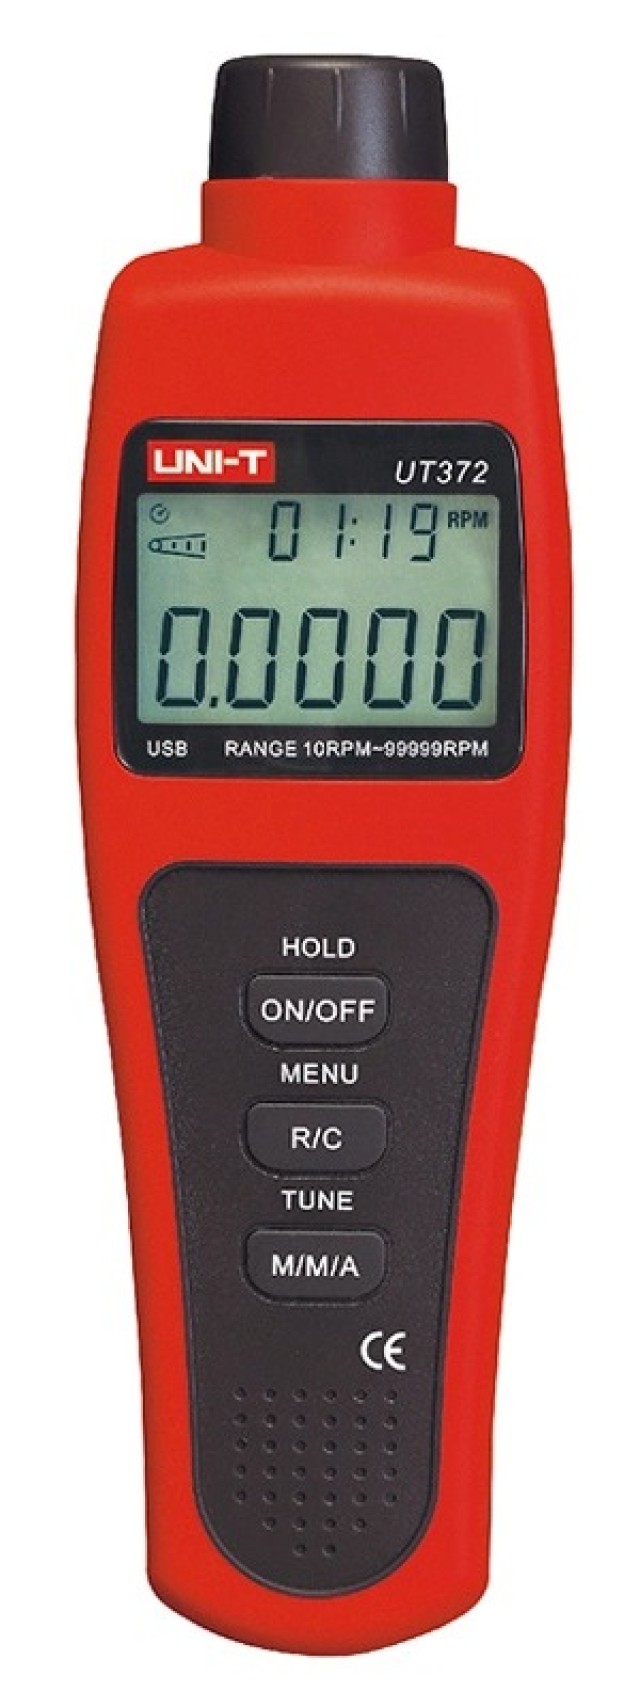 UNI-T tachometer UT372, with LCD display, USB